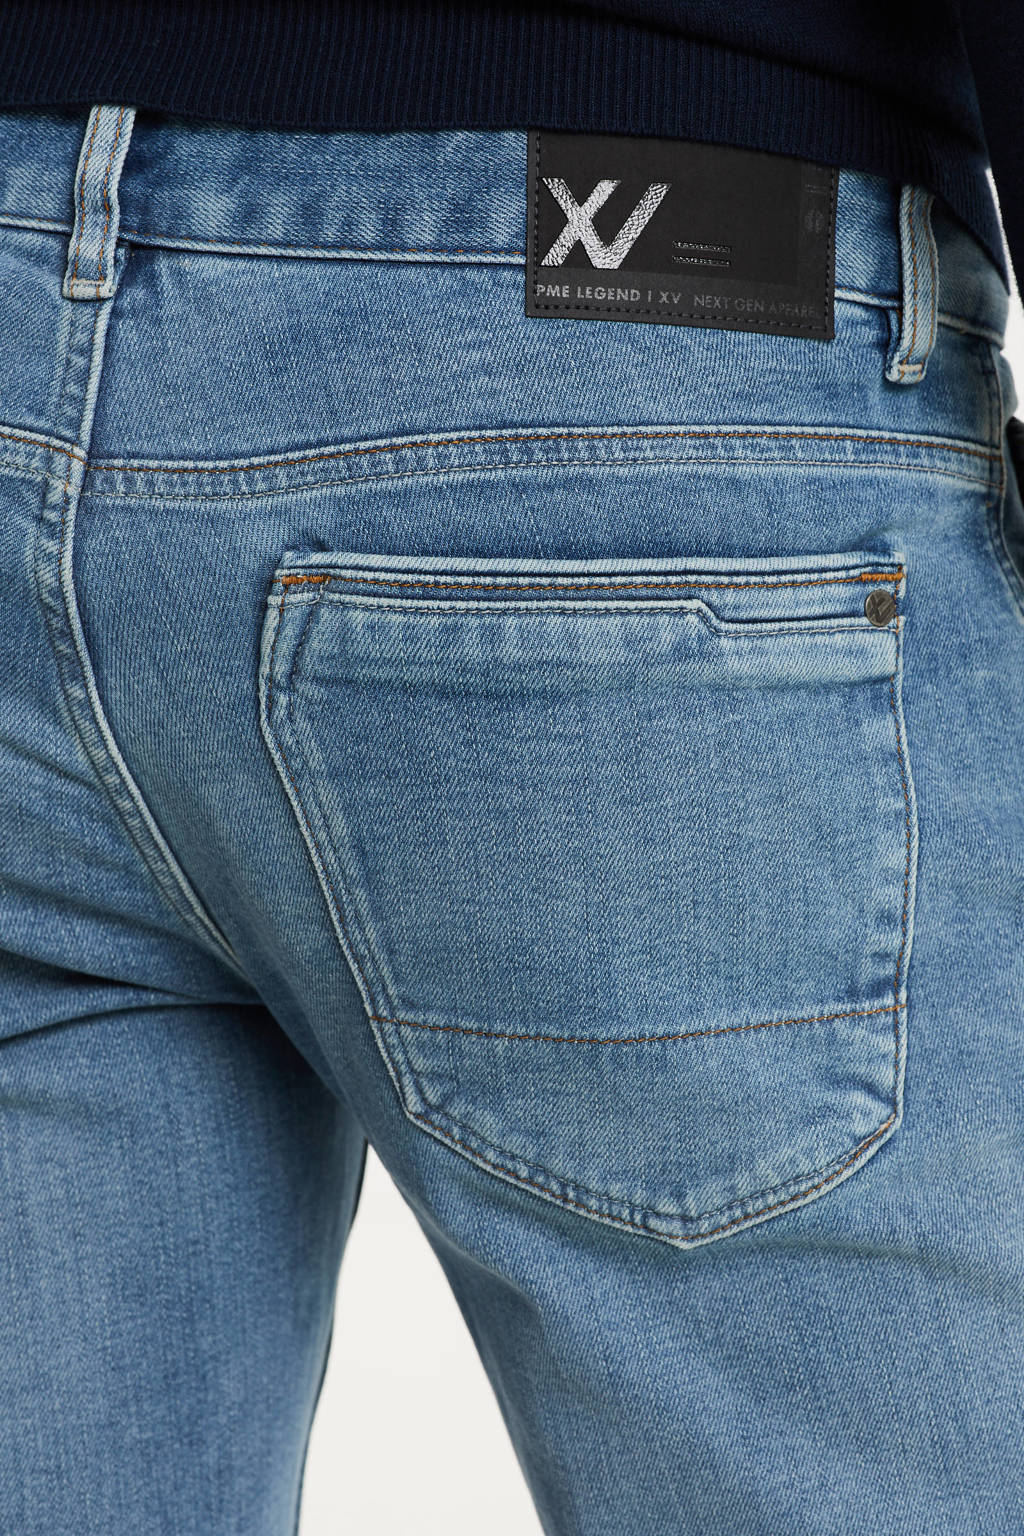 Legend slim fit jeans XV light | wehkamp